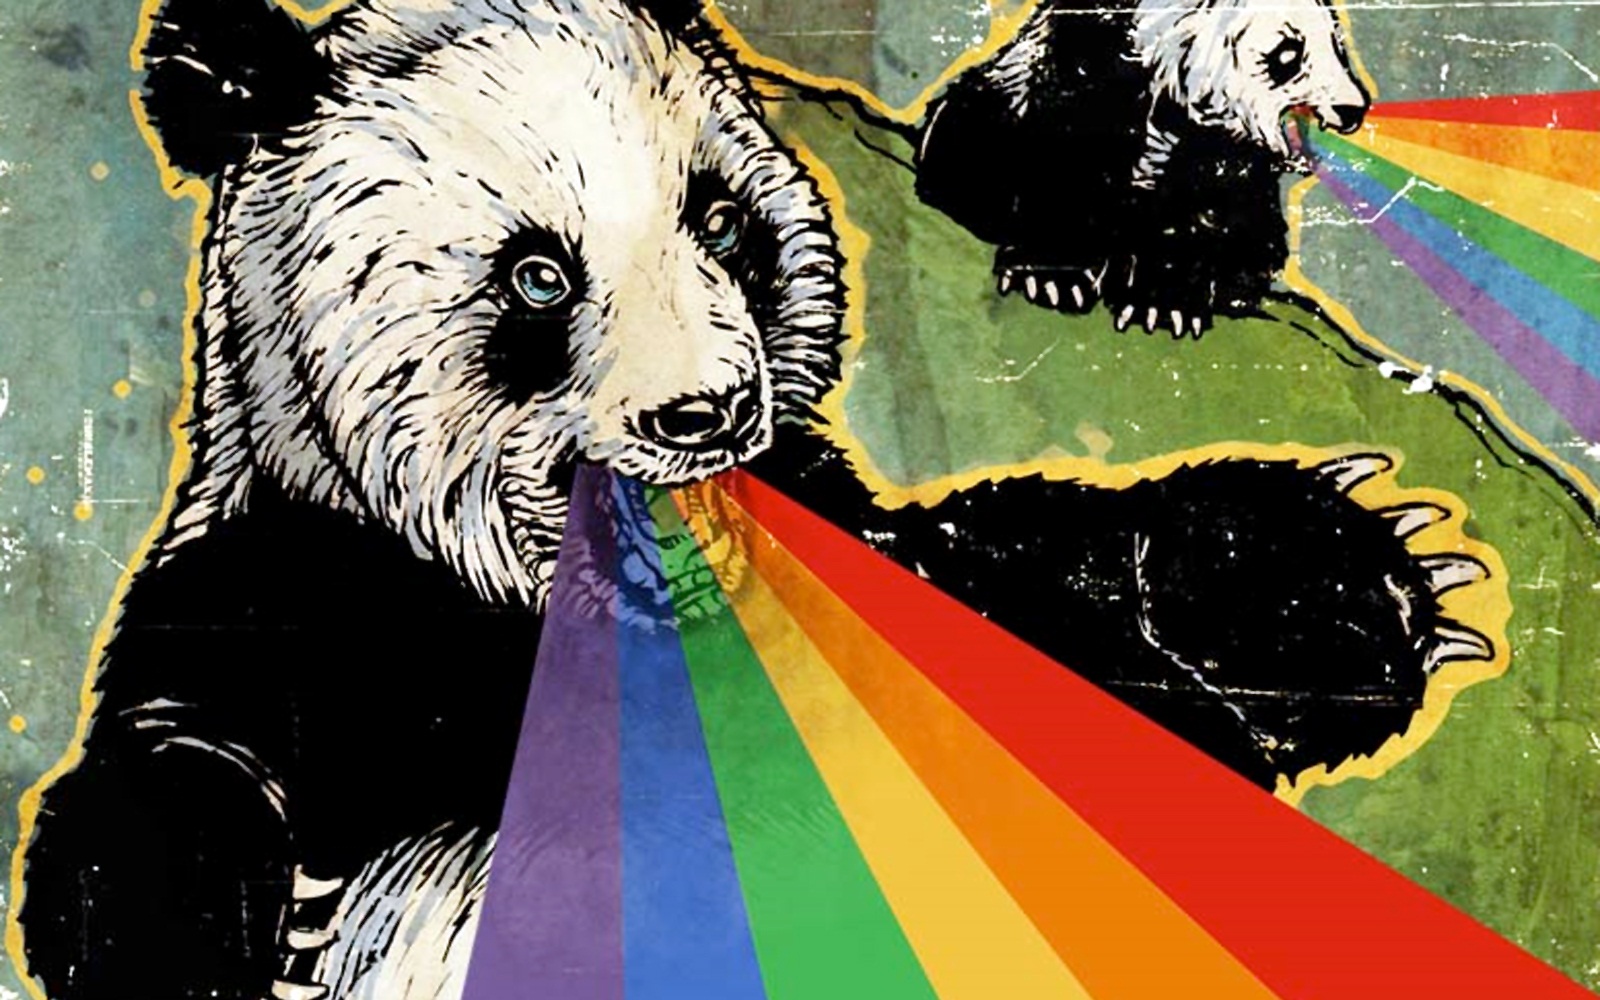 craziest wallpaper,carnivore,bear,grizzly bear,illustration,art